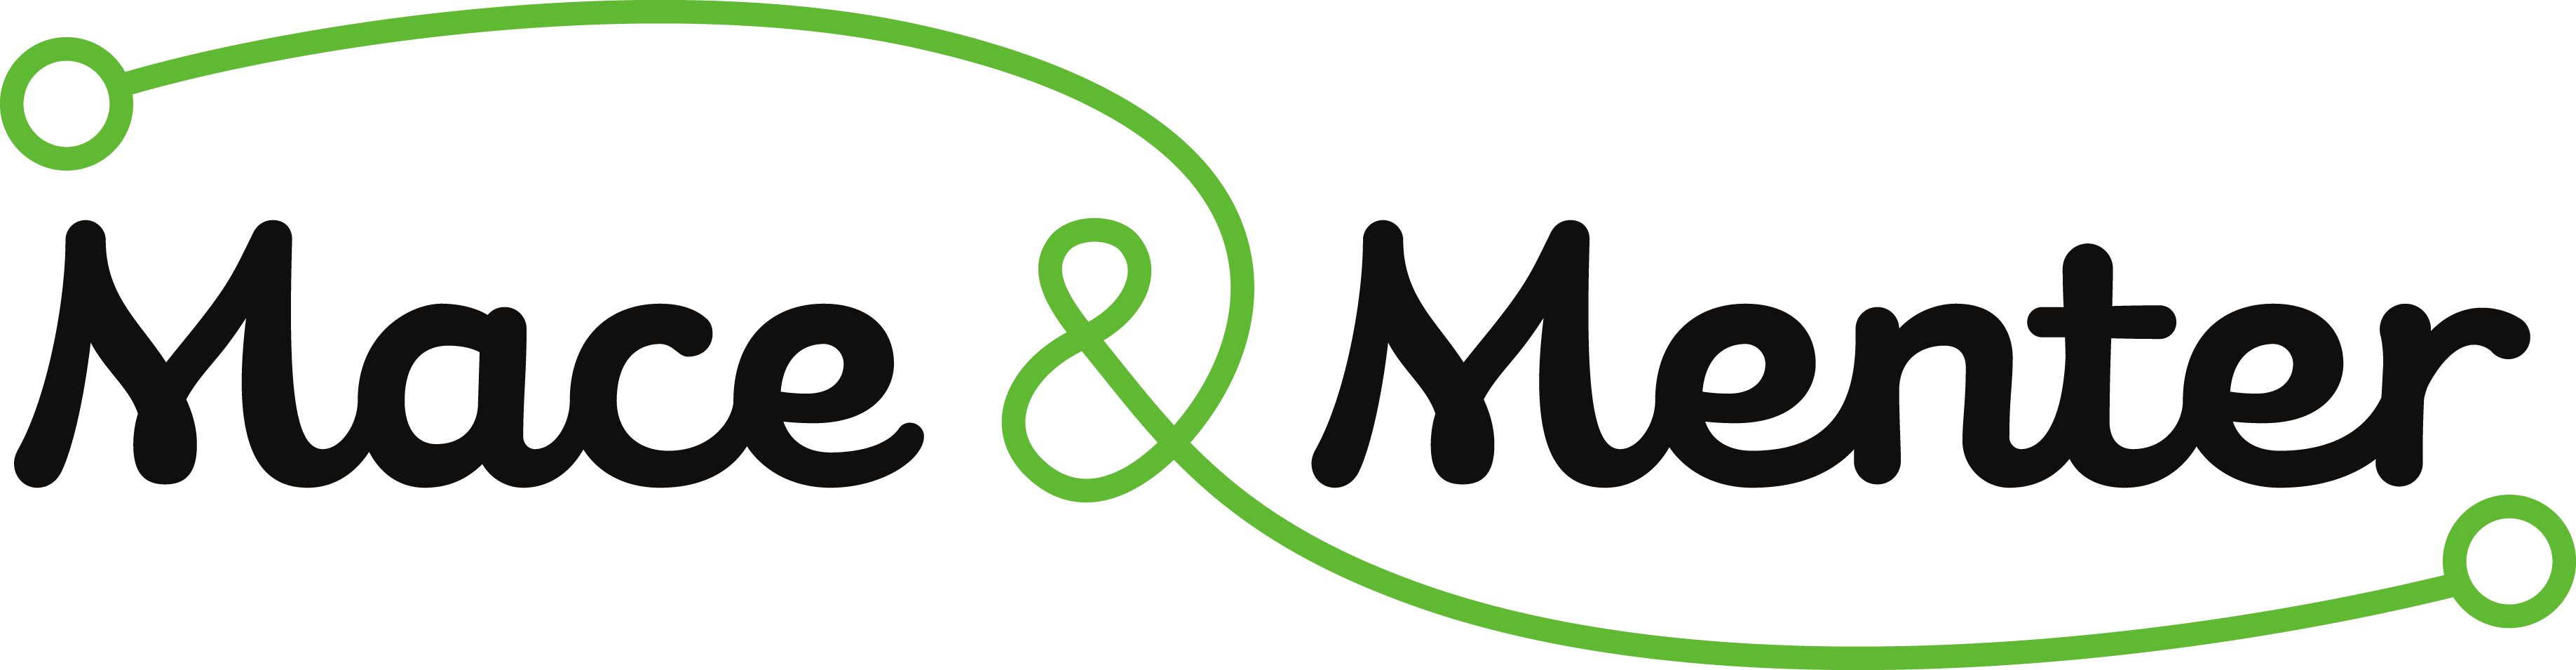 Mace & Menter logo